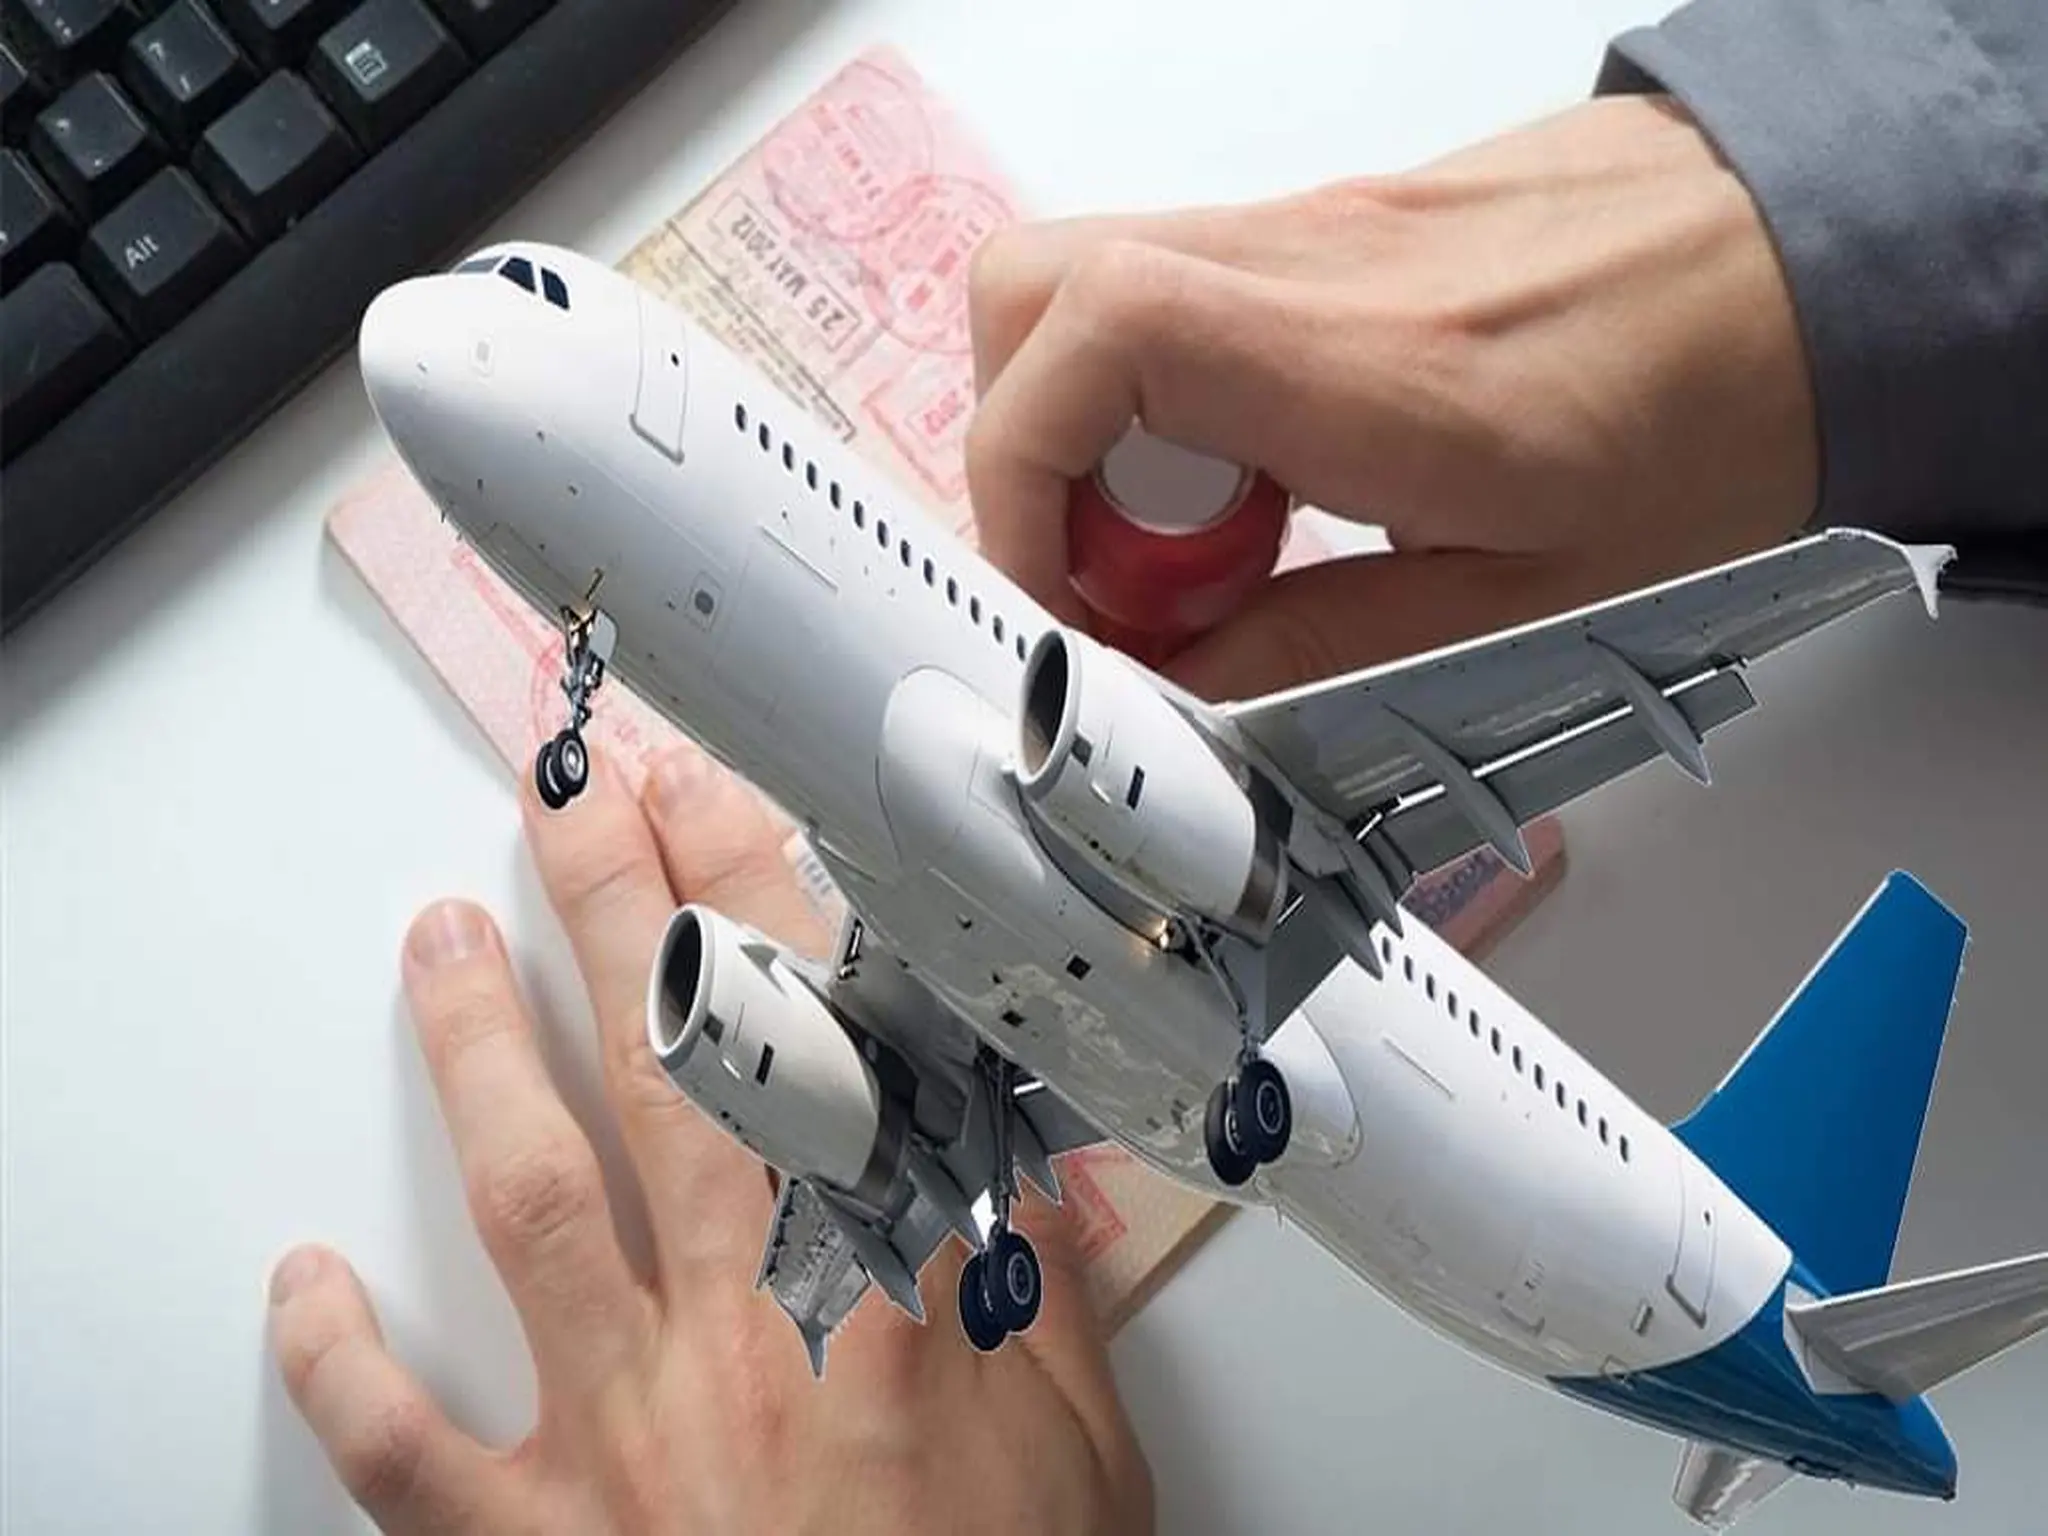 UAE: Air ticket prices continue to rise